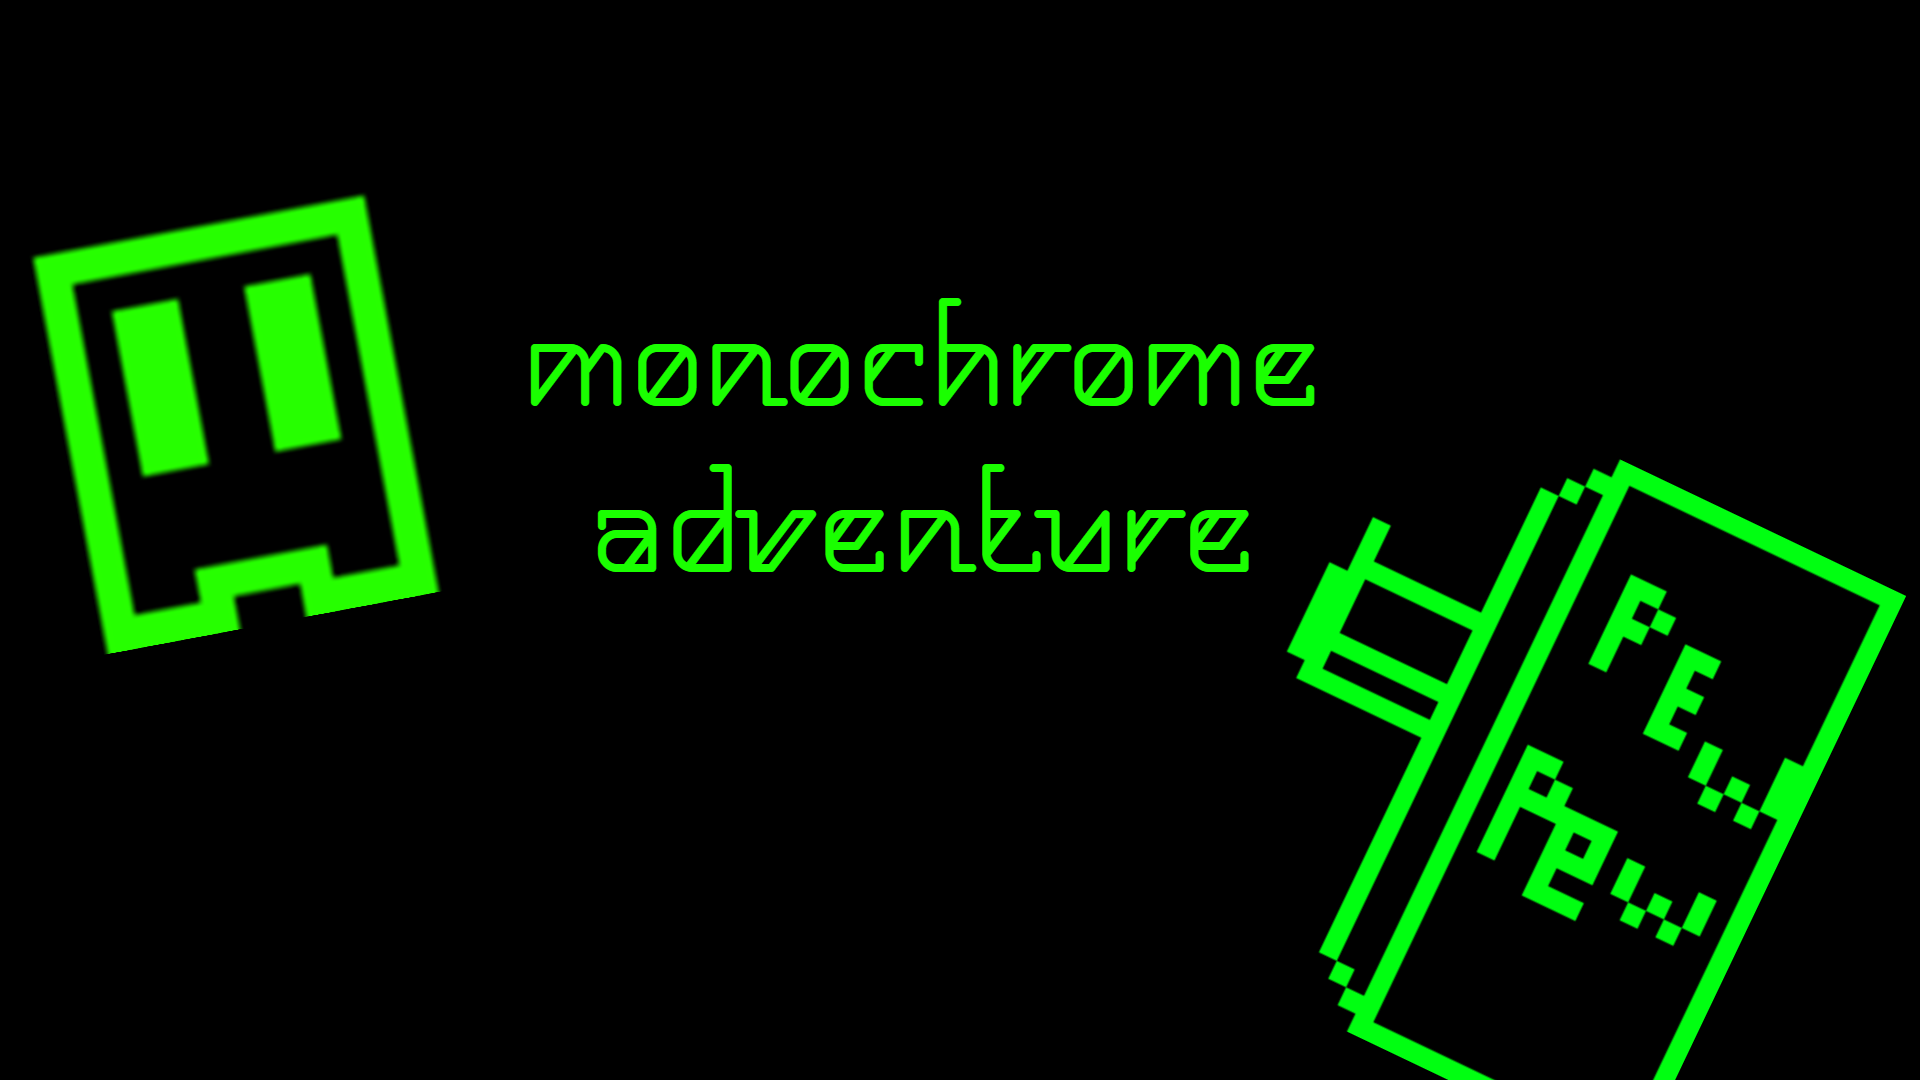 MONOCHROME adventure(gameplay demo)